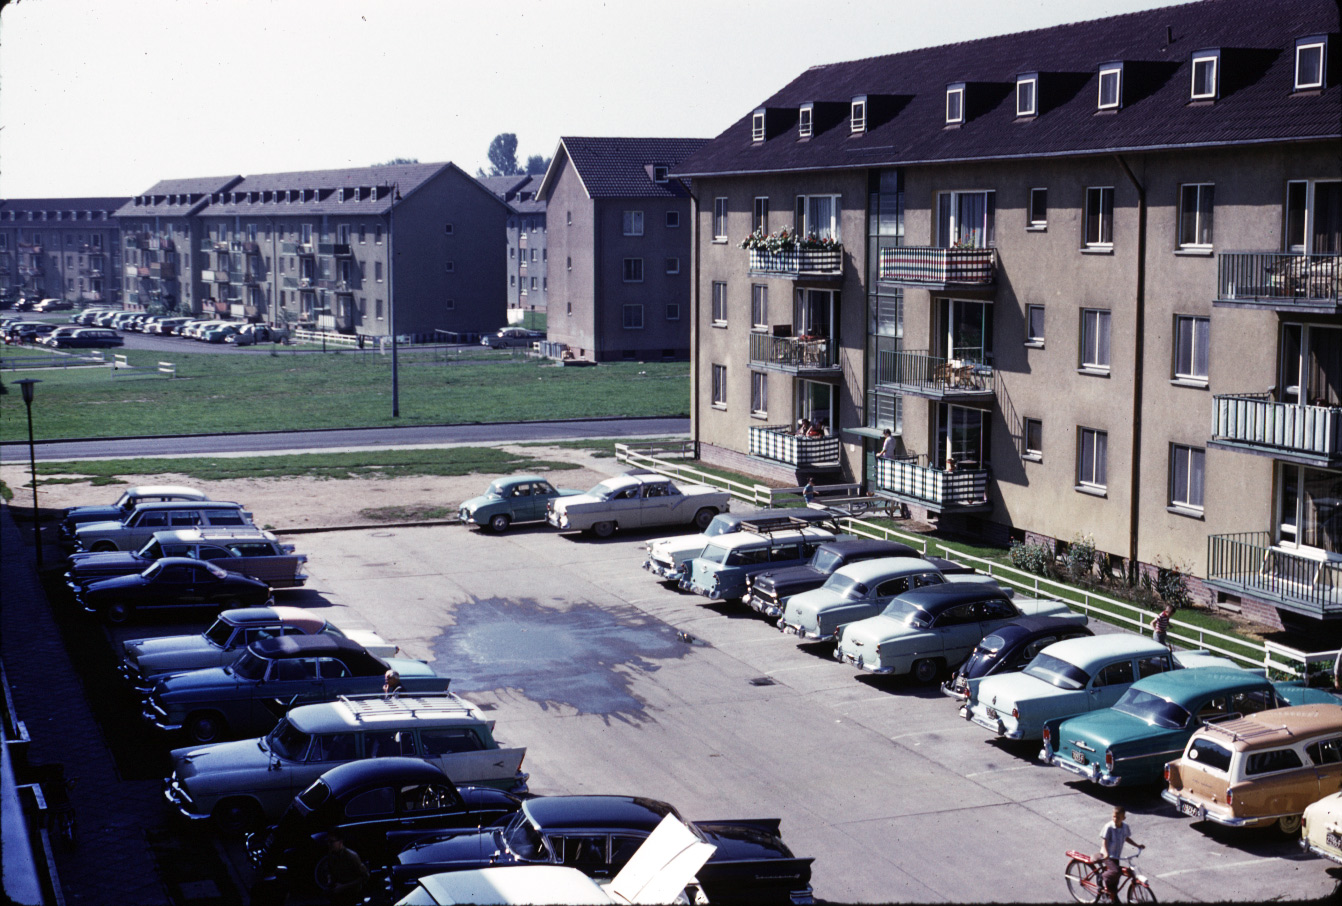 The Platenstraße housing area 1960